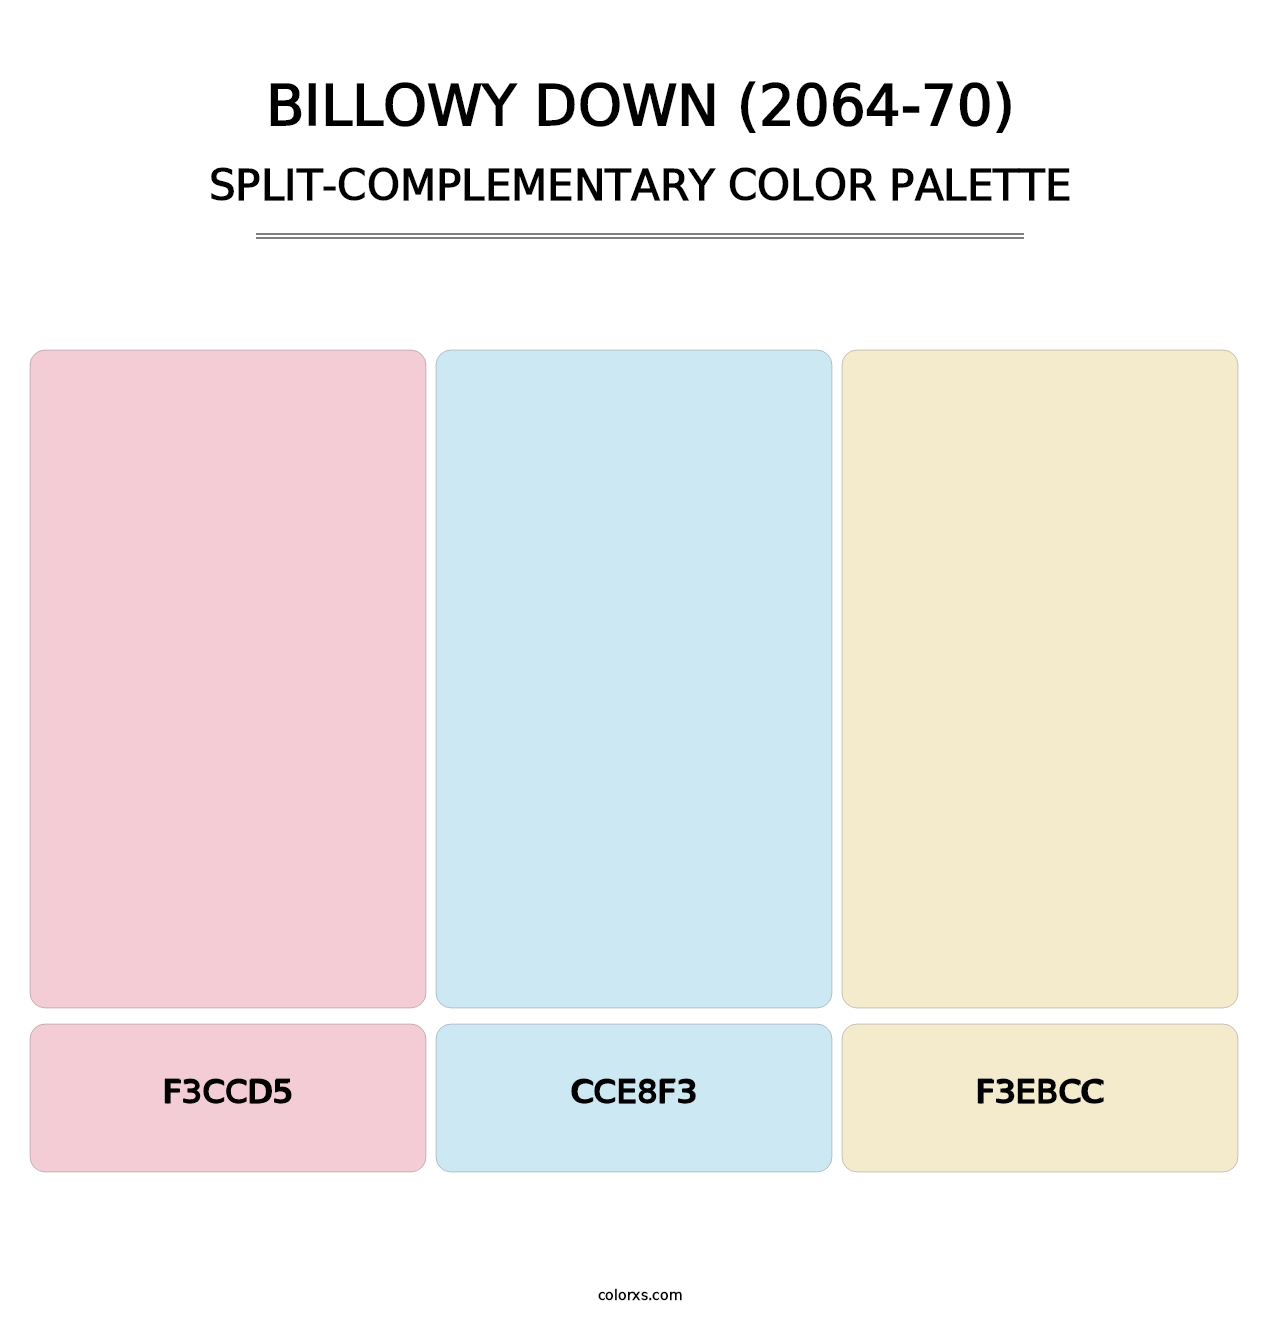 Billowy Down (2064-70) - Split-Complementary Color Palette